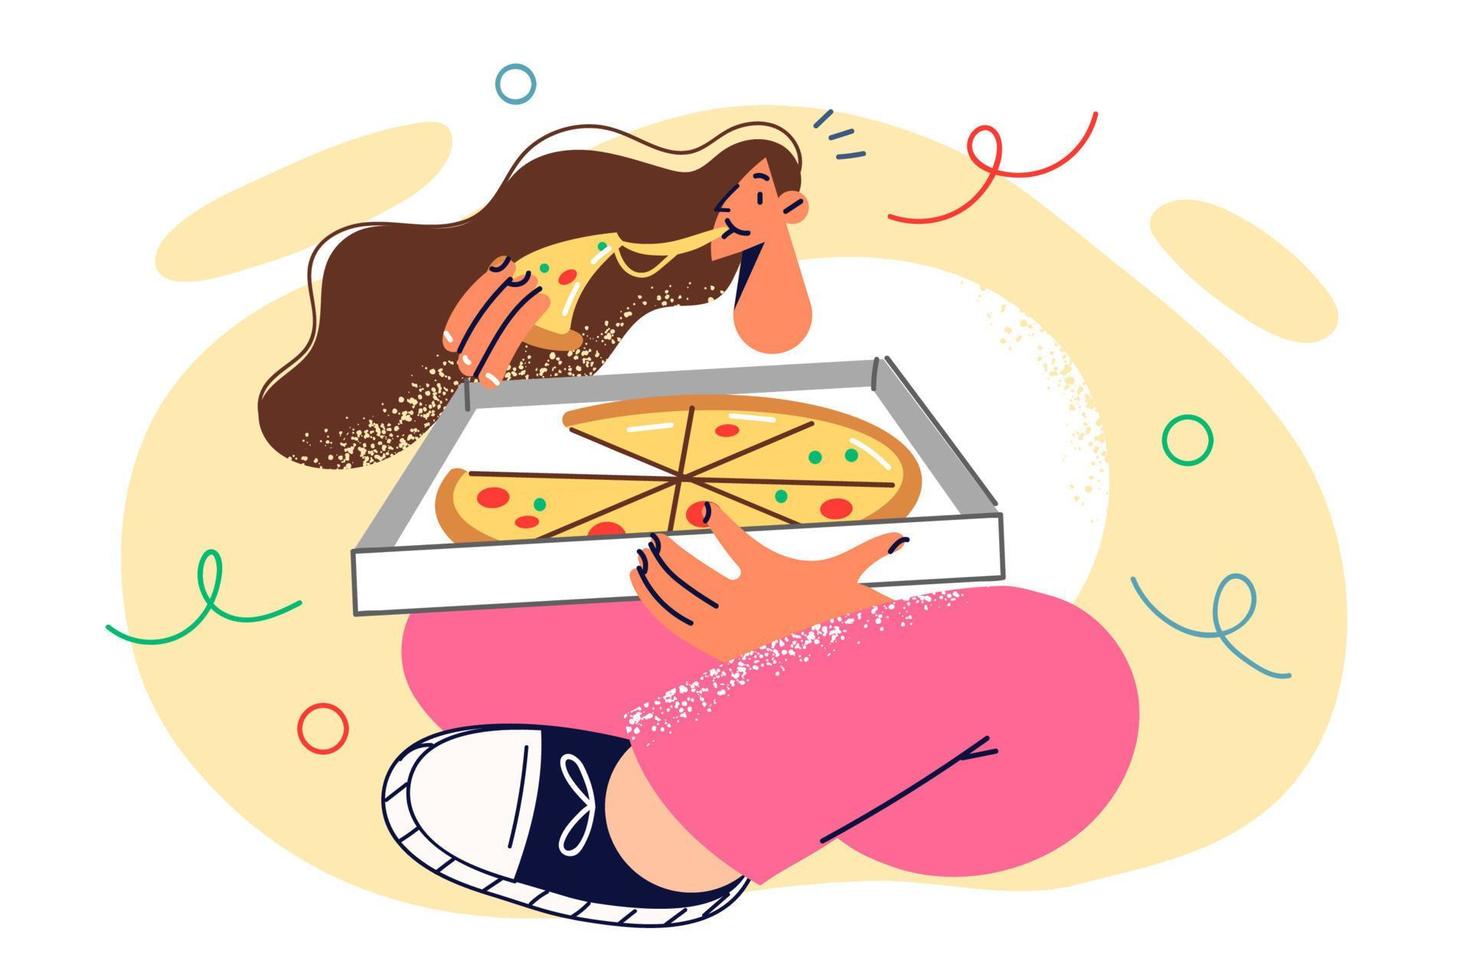 hambriento mujer sentado en piso cruzar rodillas con Pizza dentro caja entregado desde italiano comida restaurante. niña sostiene rebanada apetitoso caliente Pizza con extensión queso durante almuerzo descanso come rápido comida vector